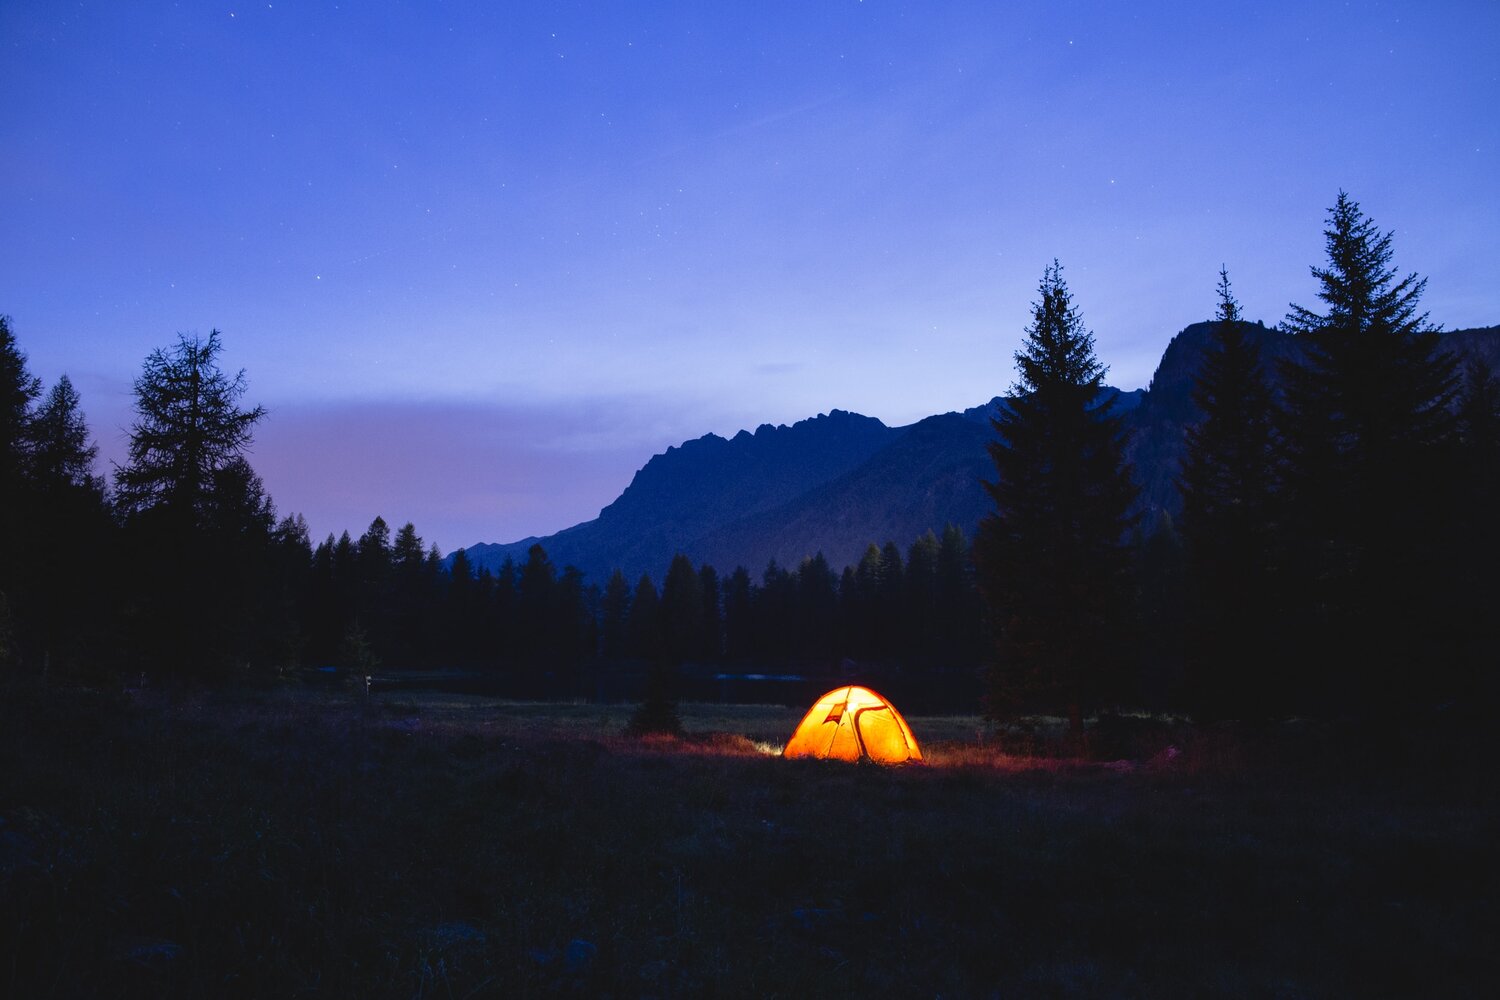 Camping Essentials Checklist - Easy Peazy Family Breaks